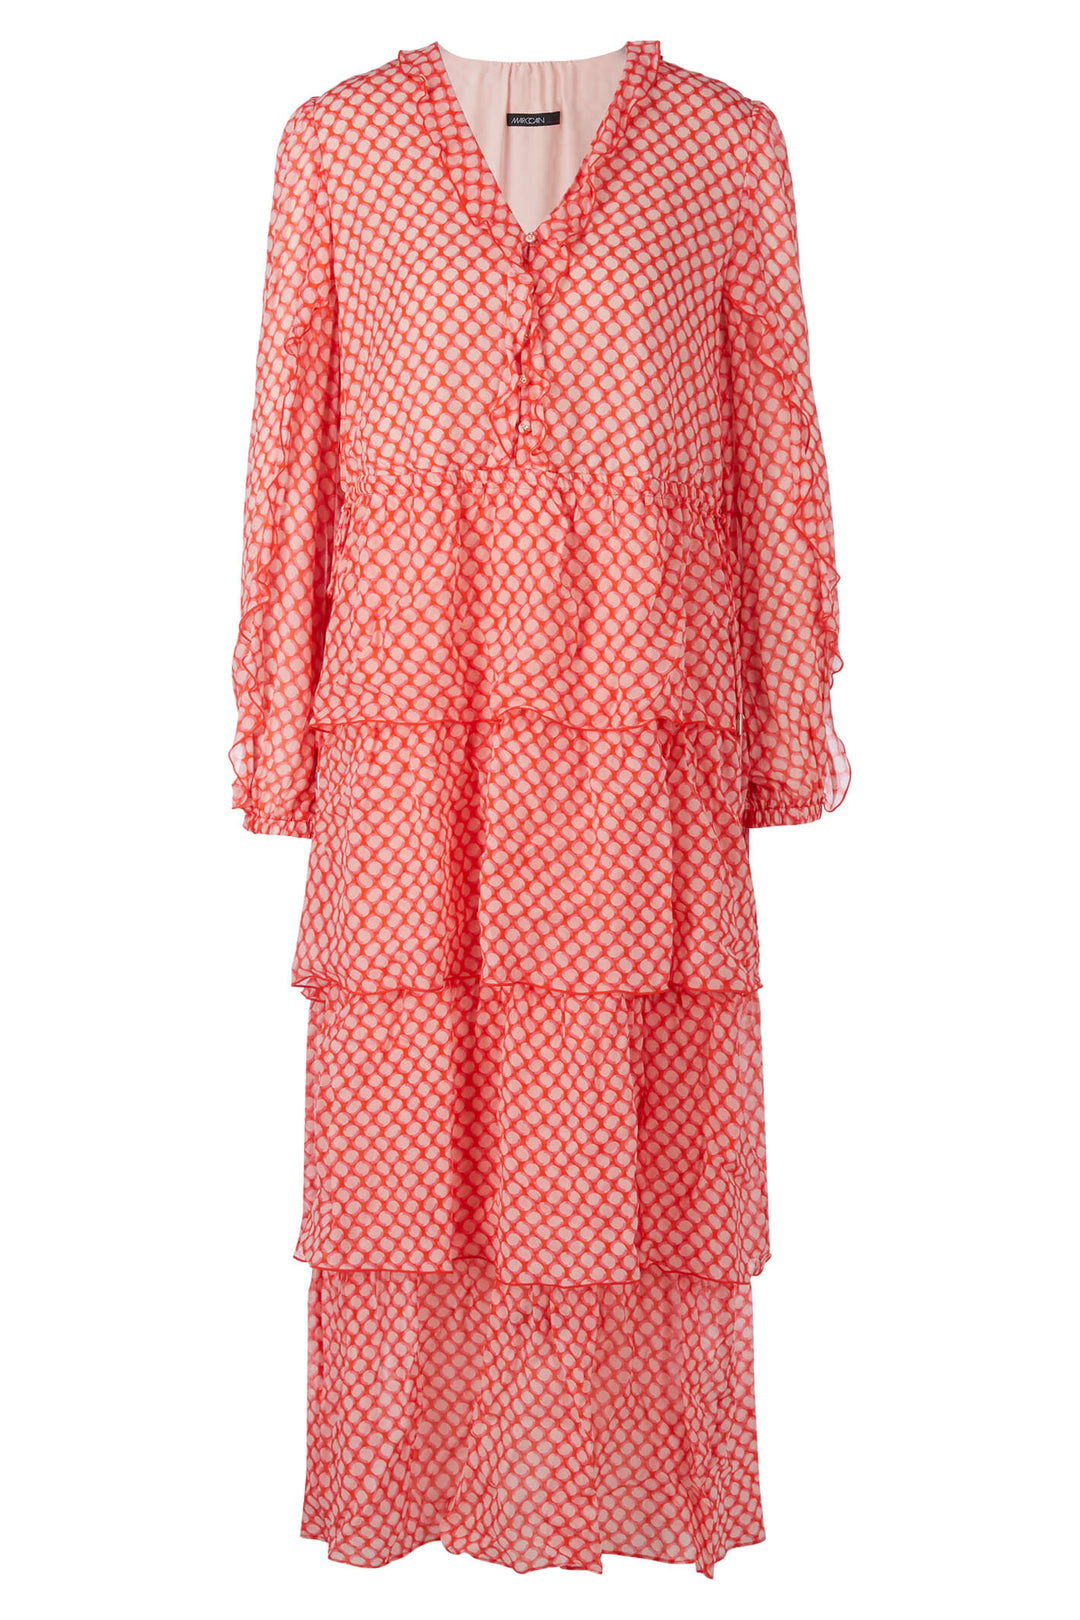 Marc Cain Collection UC 21.10 W46 Tangerine Orange Layered Dress - Olivia Grace Fashion